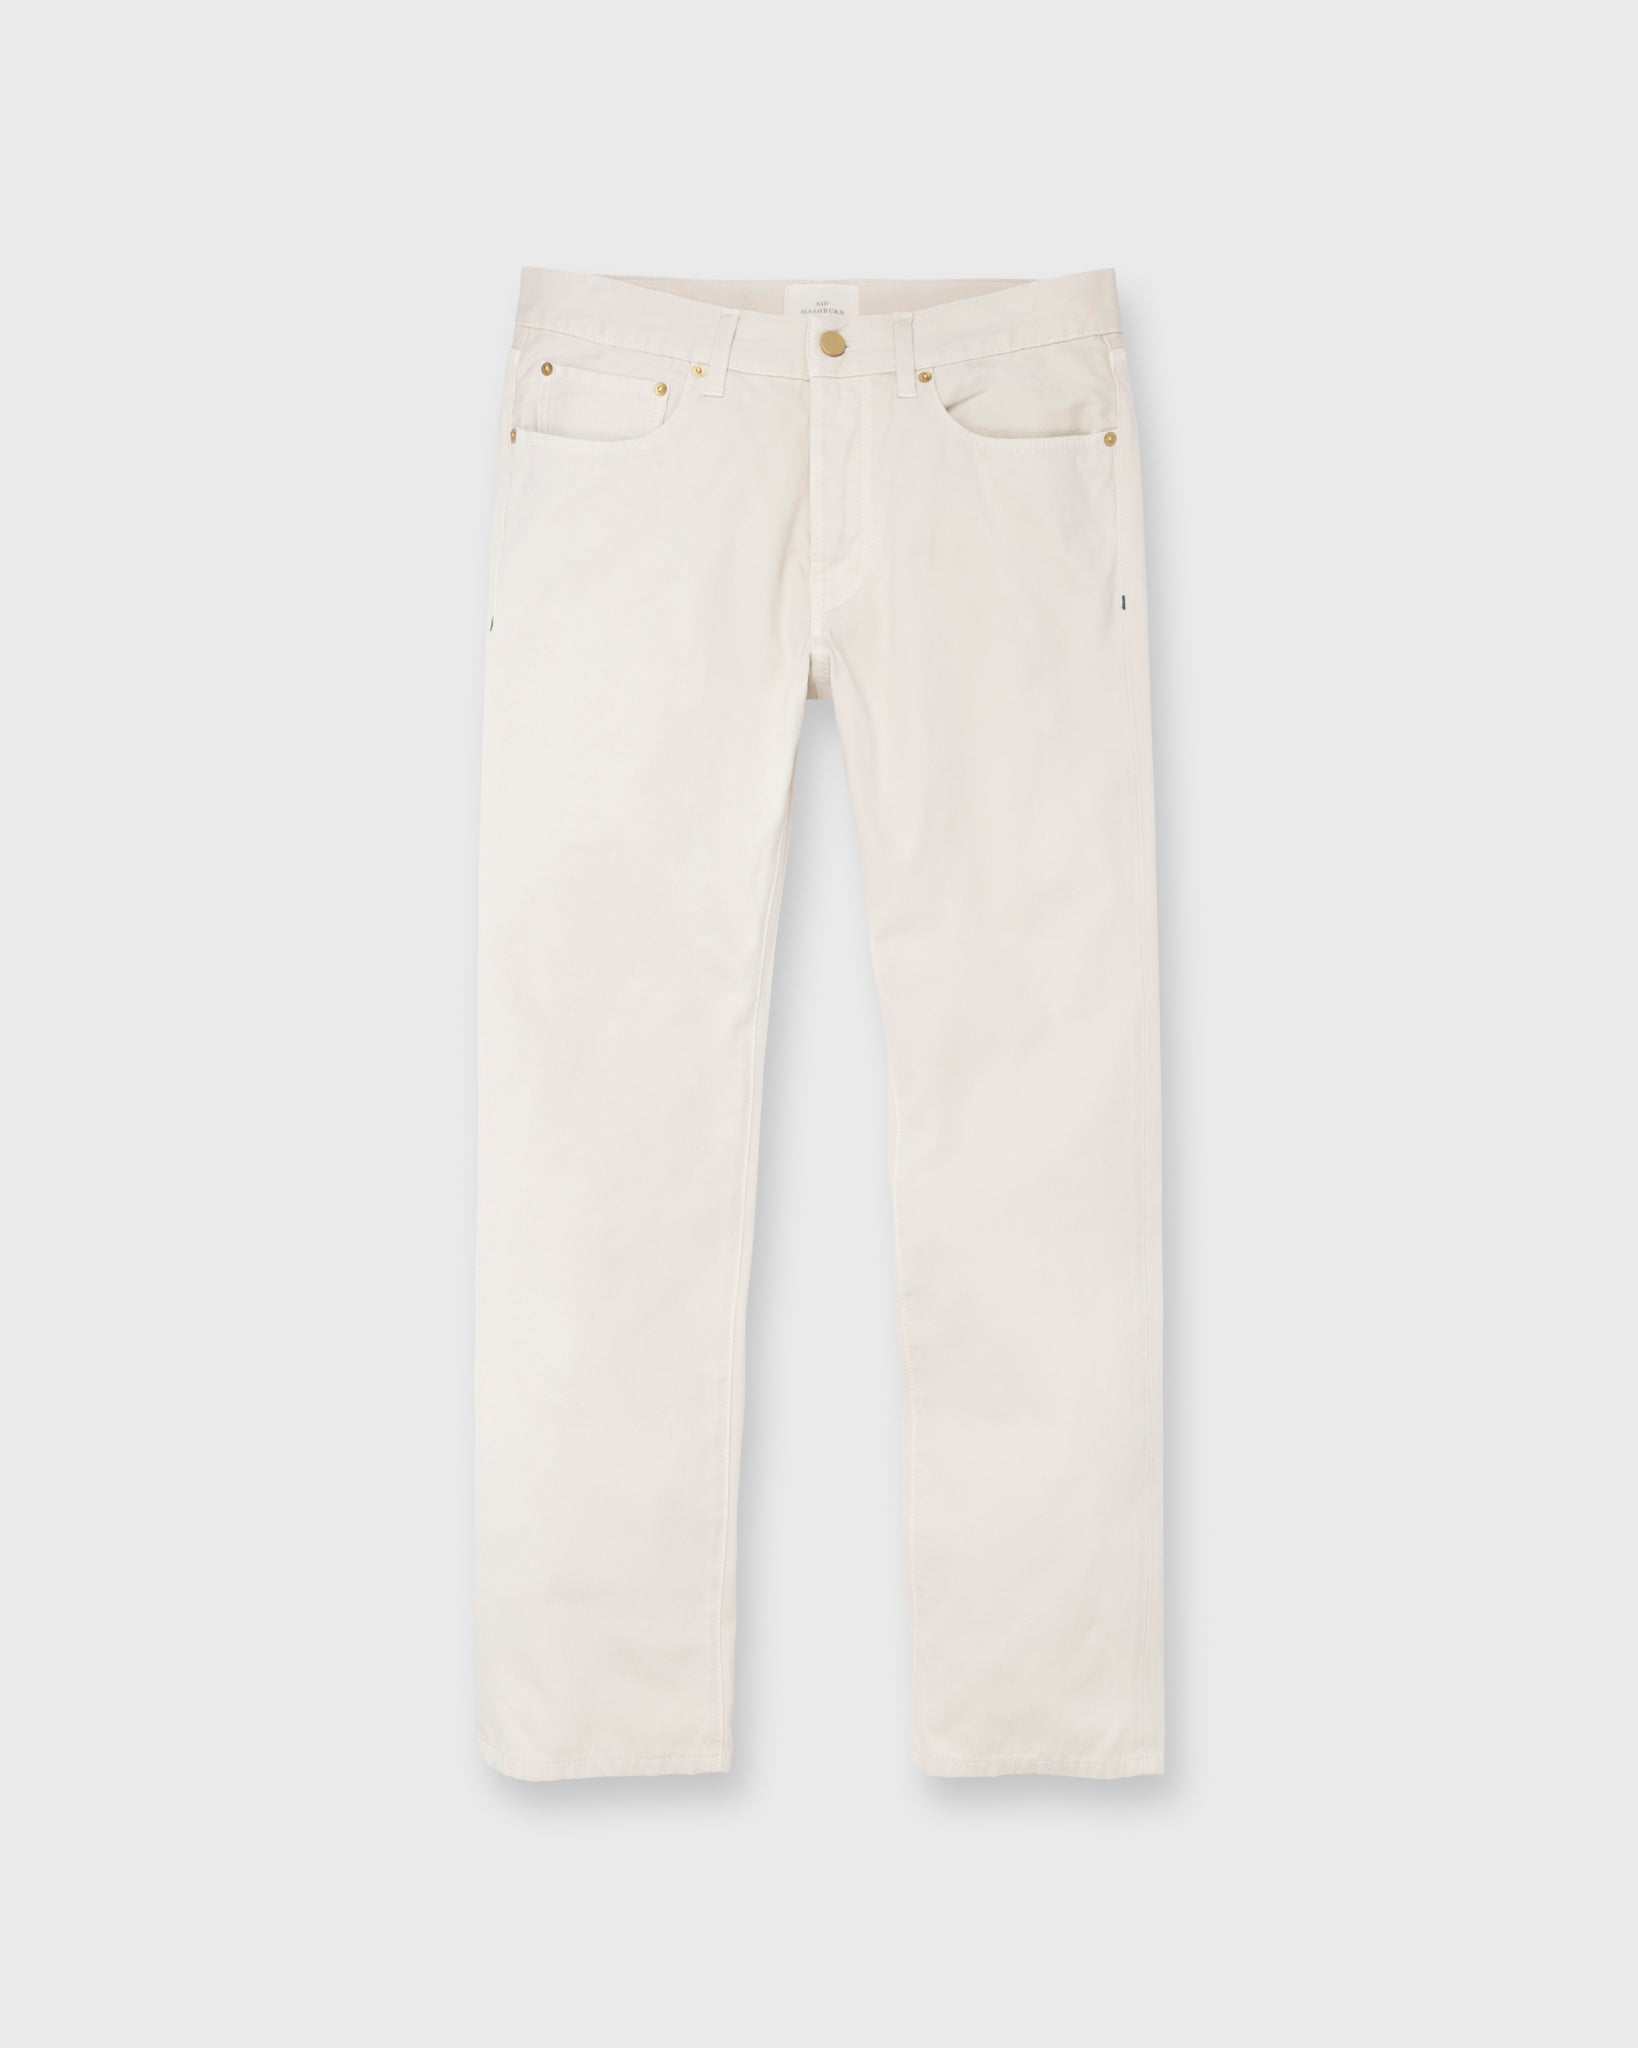 Slim Straight 5-Pocket Pant in Stone Bedford Cord